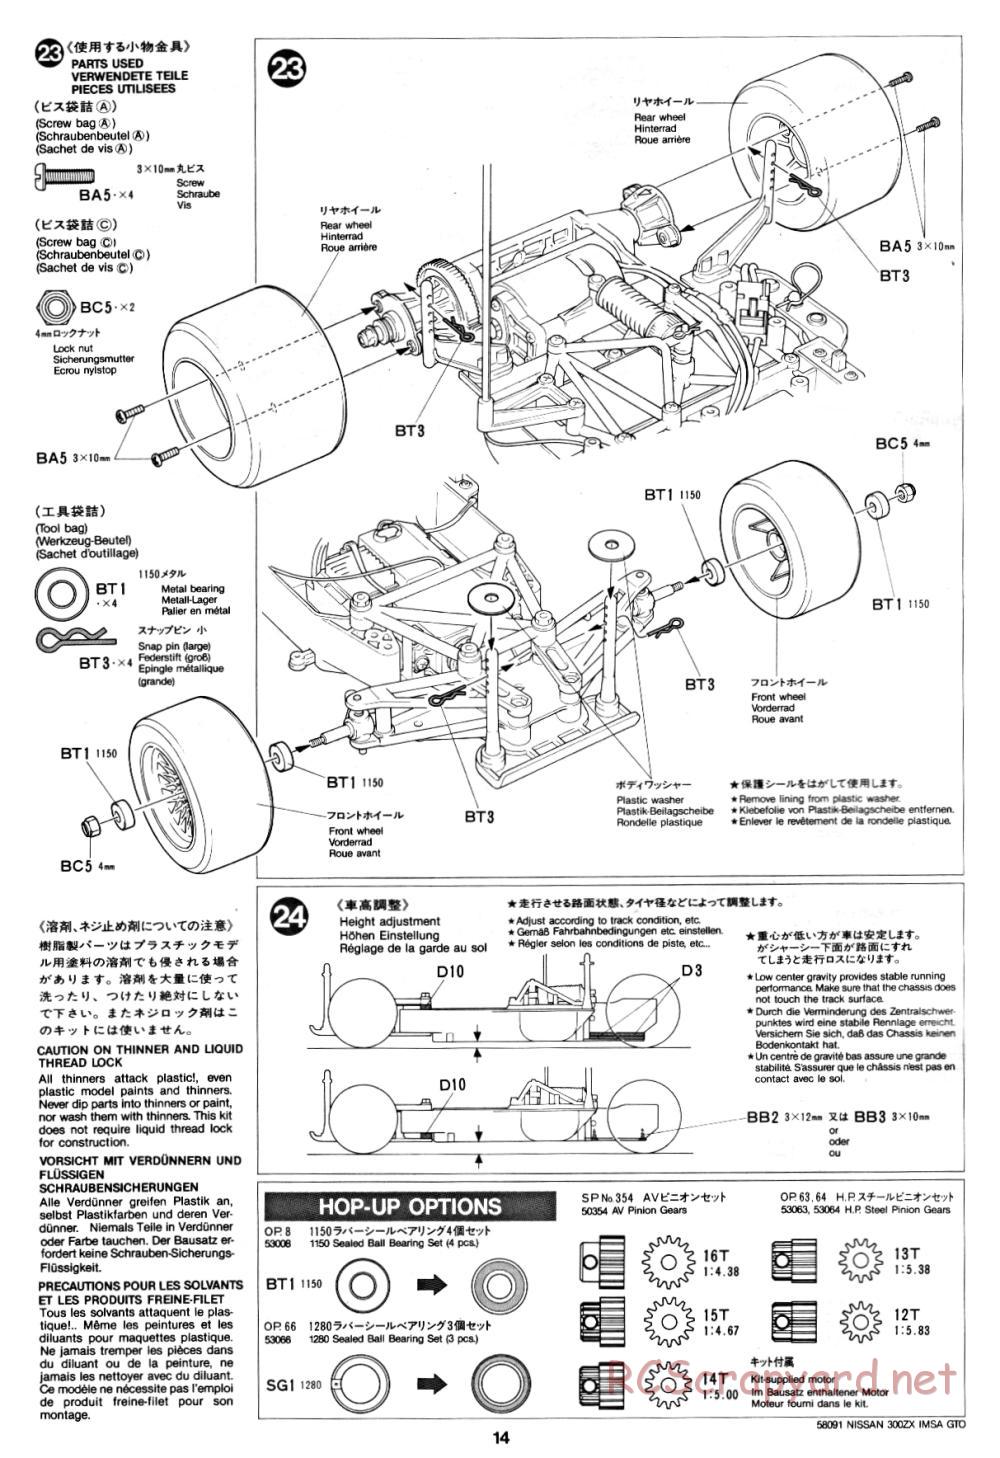 Tamiya - Nissan 300ZX IMSA GTO - 58091 - Manual - Page 14